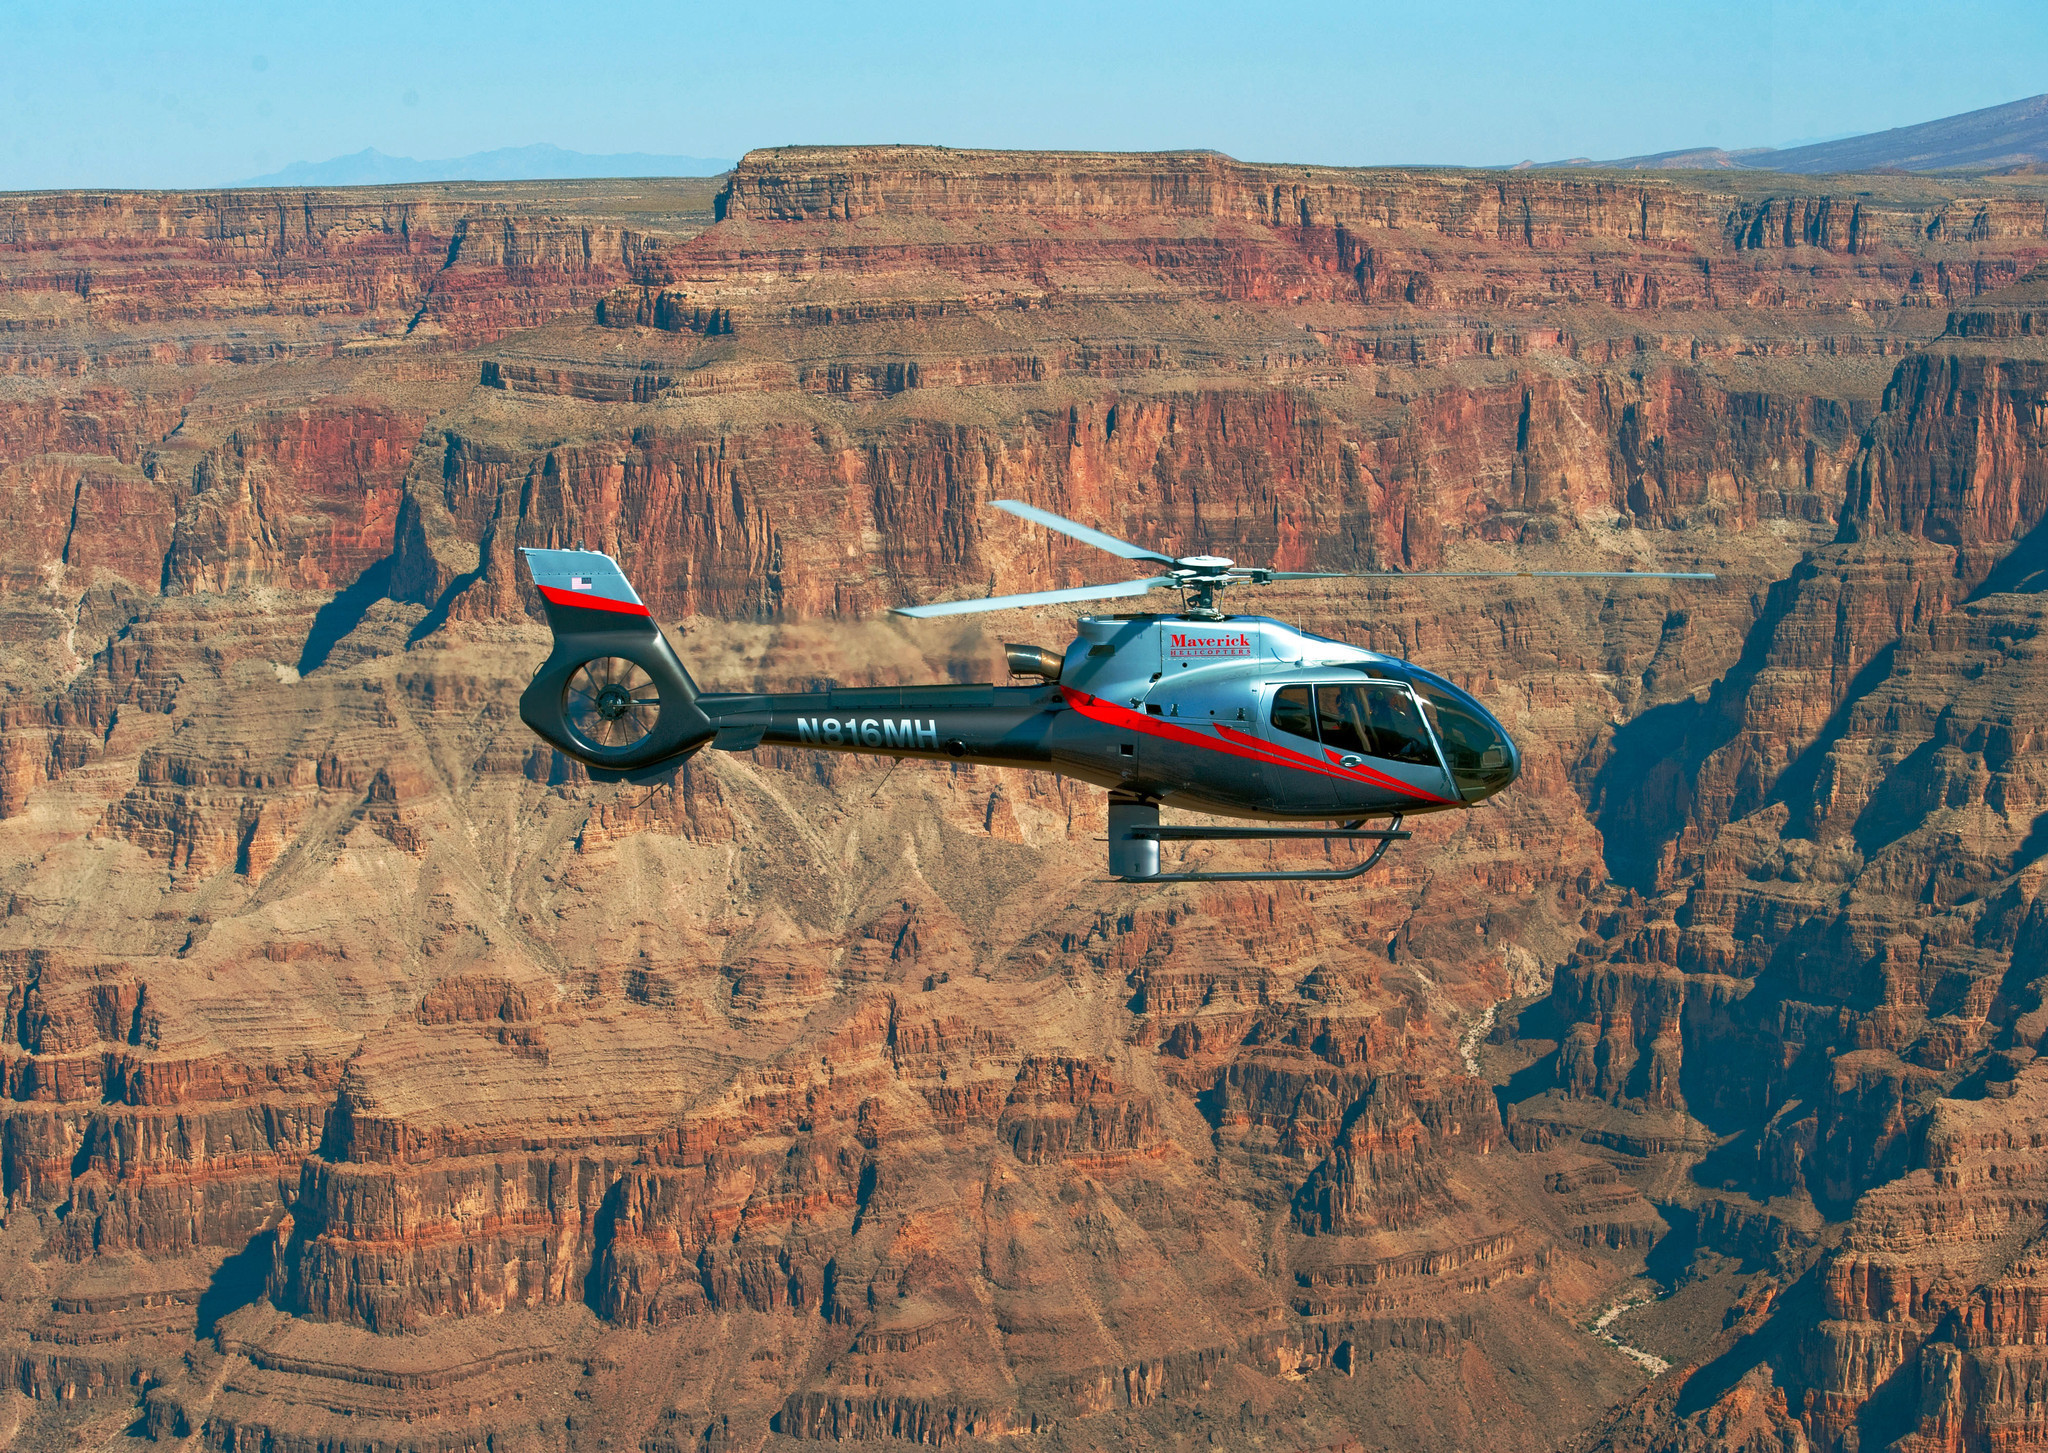 Las Vegas Grand Canyon Helicopter Tour